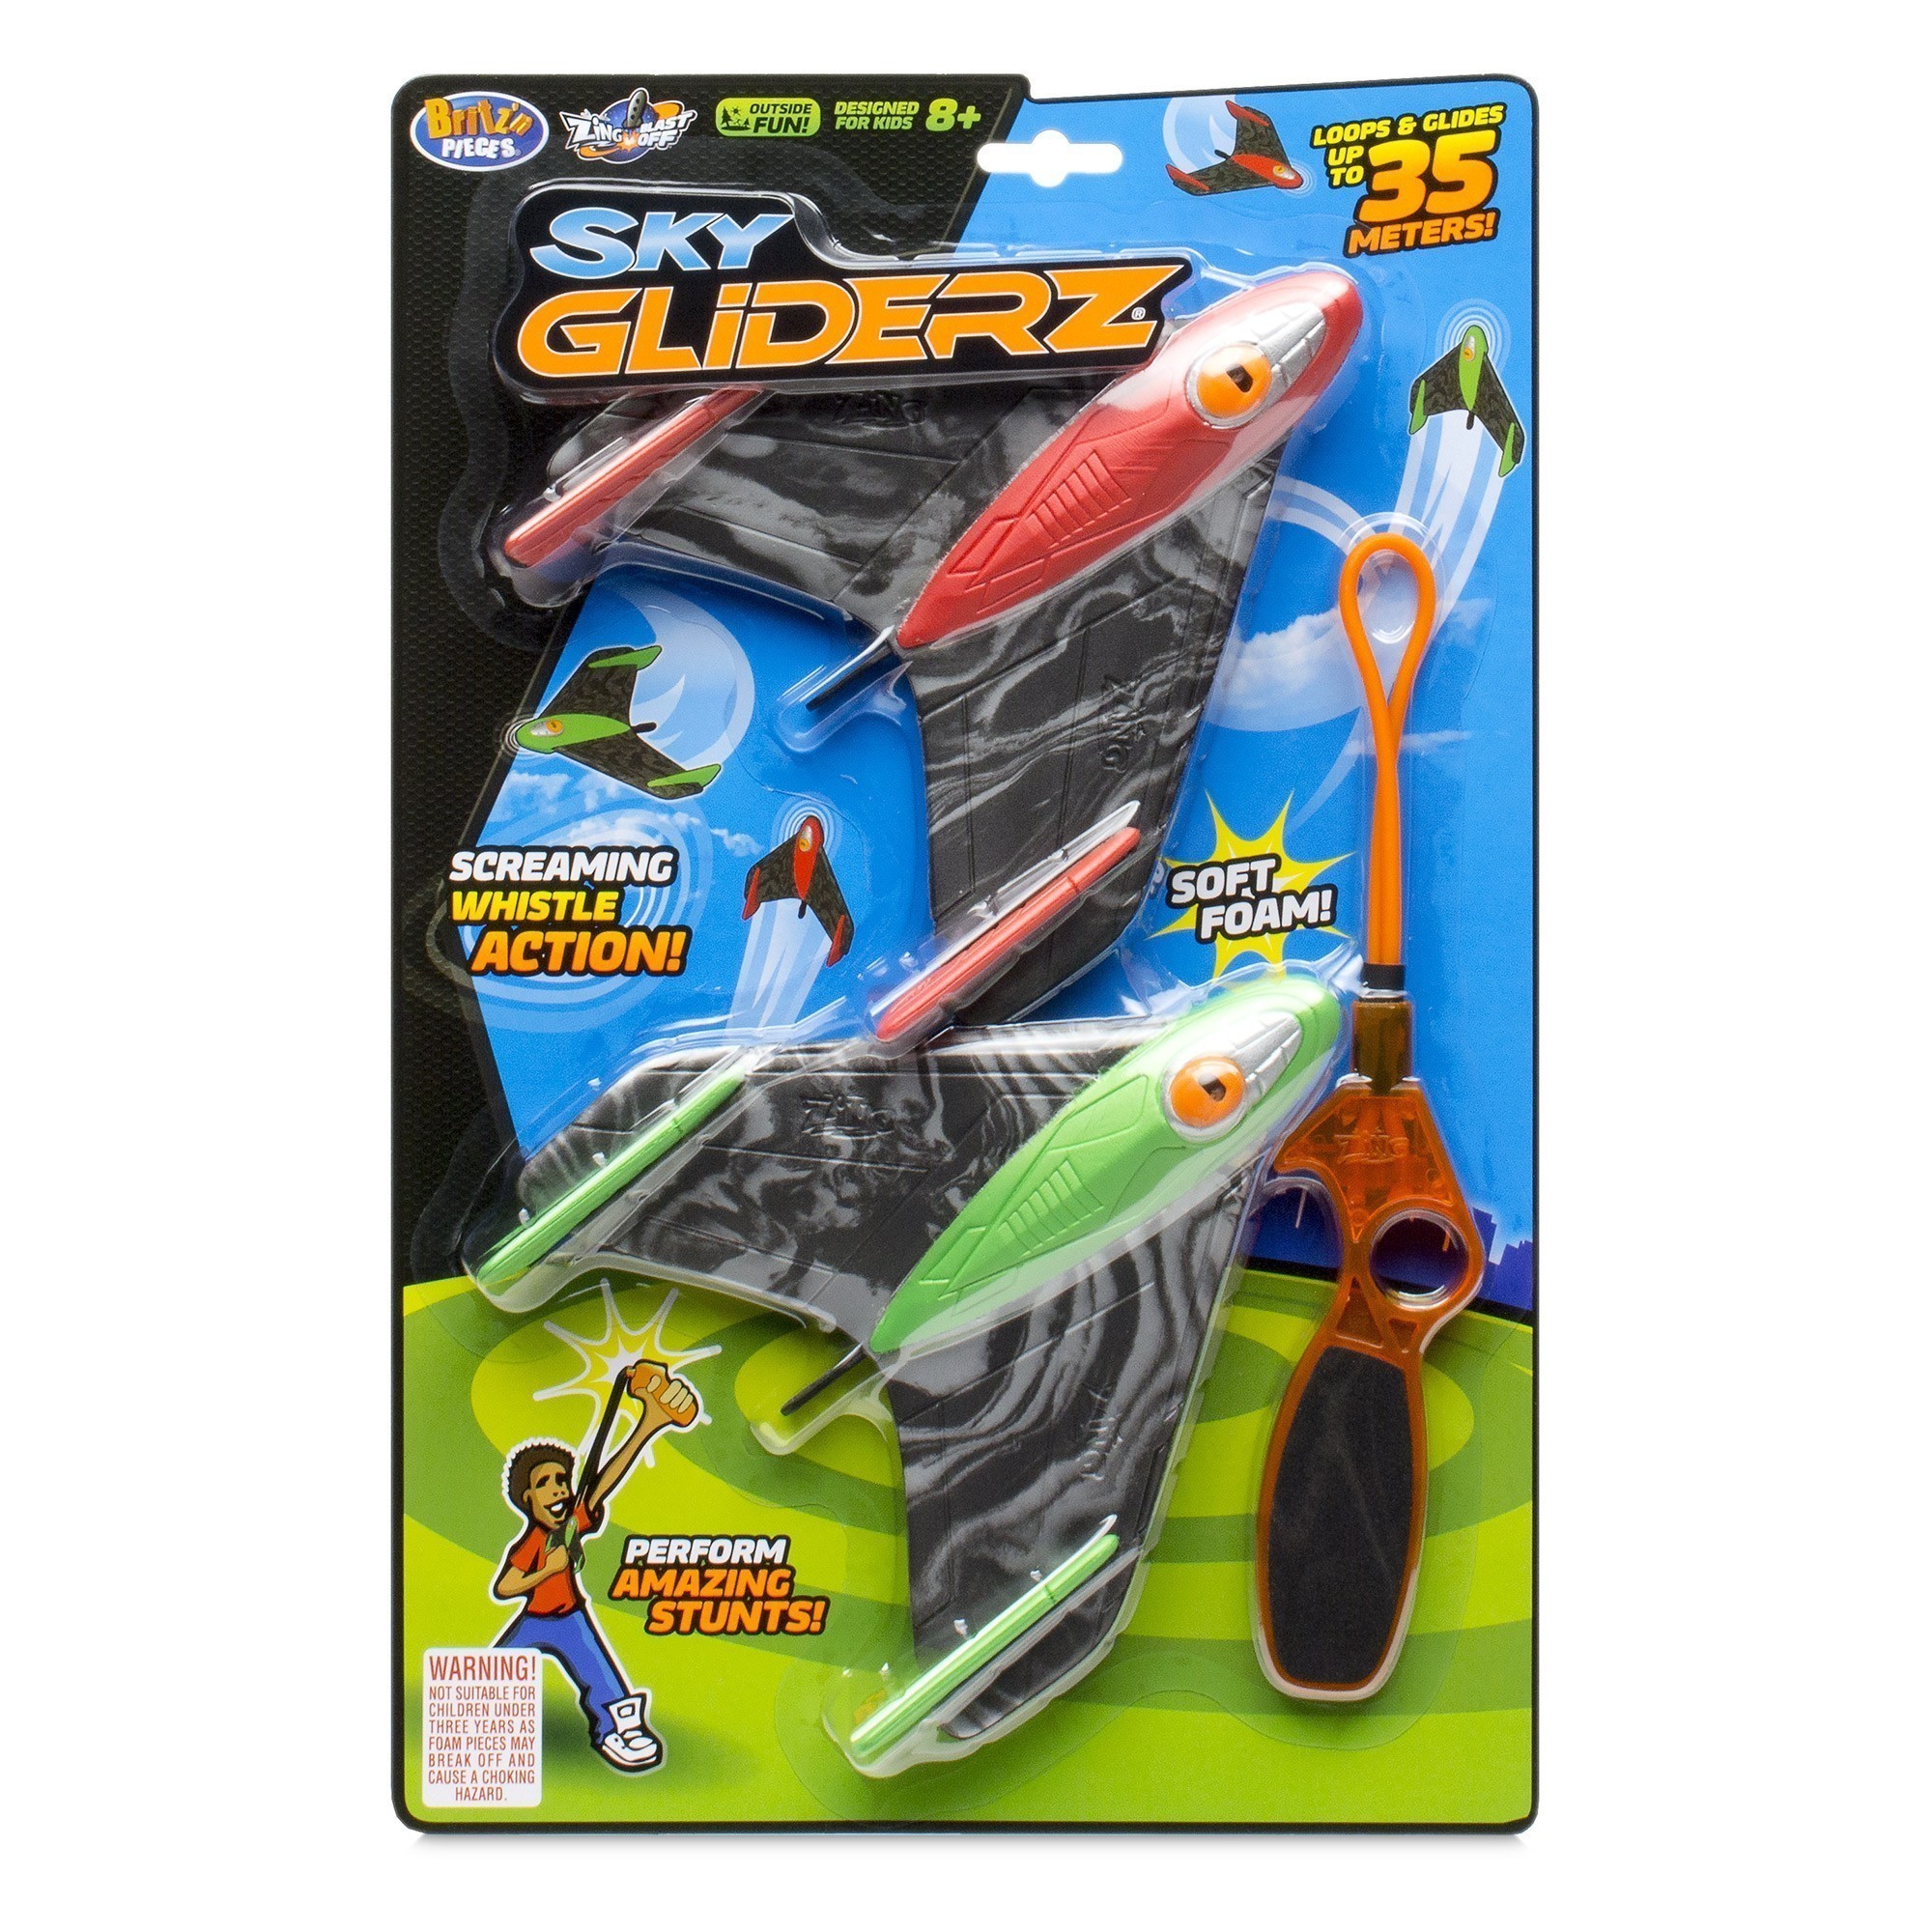 Sky Gliderz - Twin Pack